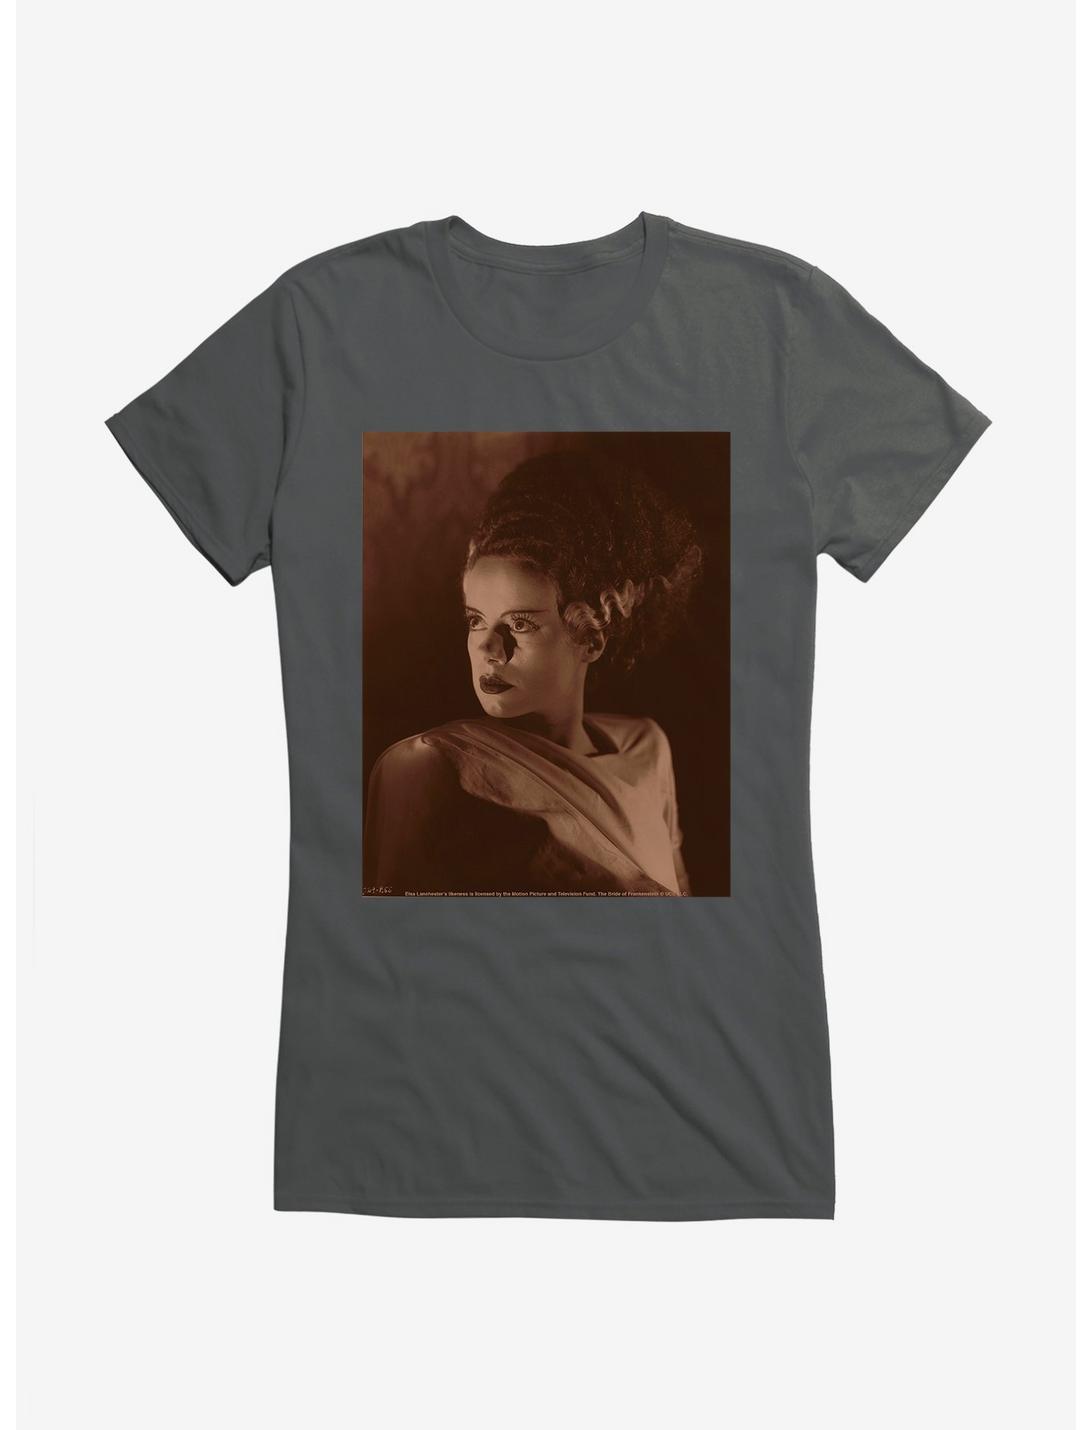 Universal Monsters Bride Of Frankenstein Movie Frame Girls T-Shirt, , hi-res